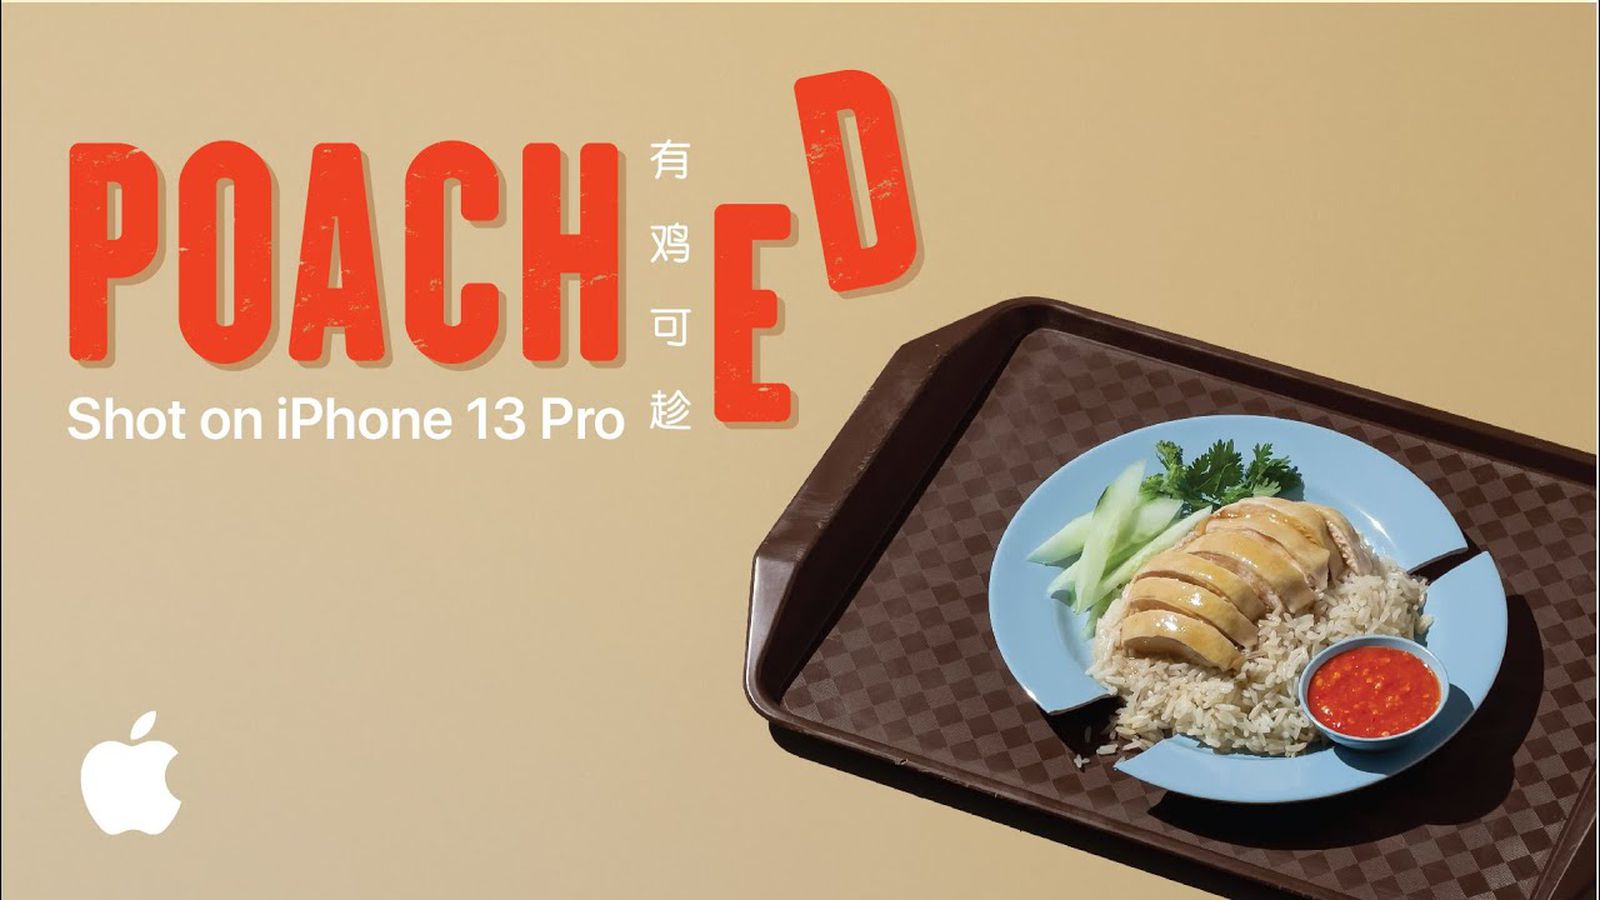 Apple Shares Singaporean Food Documentary Shot on iPhone 13 Pro - macrumors.com